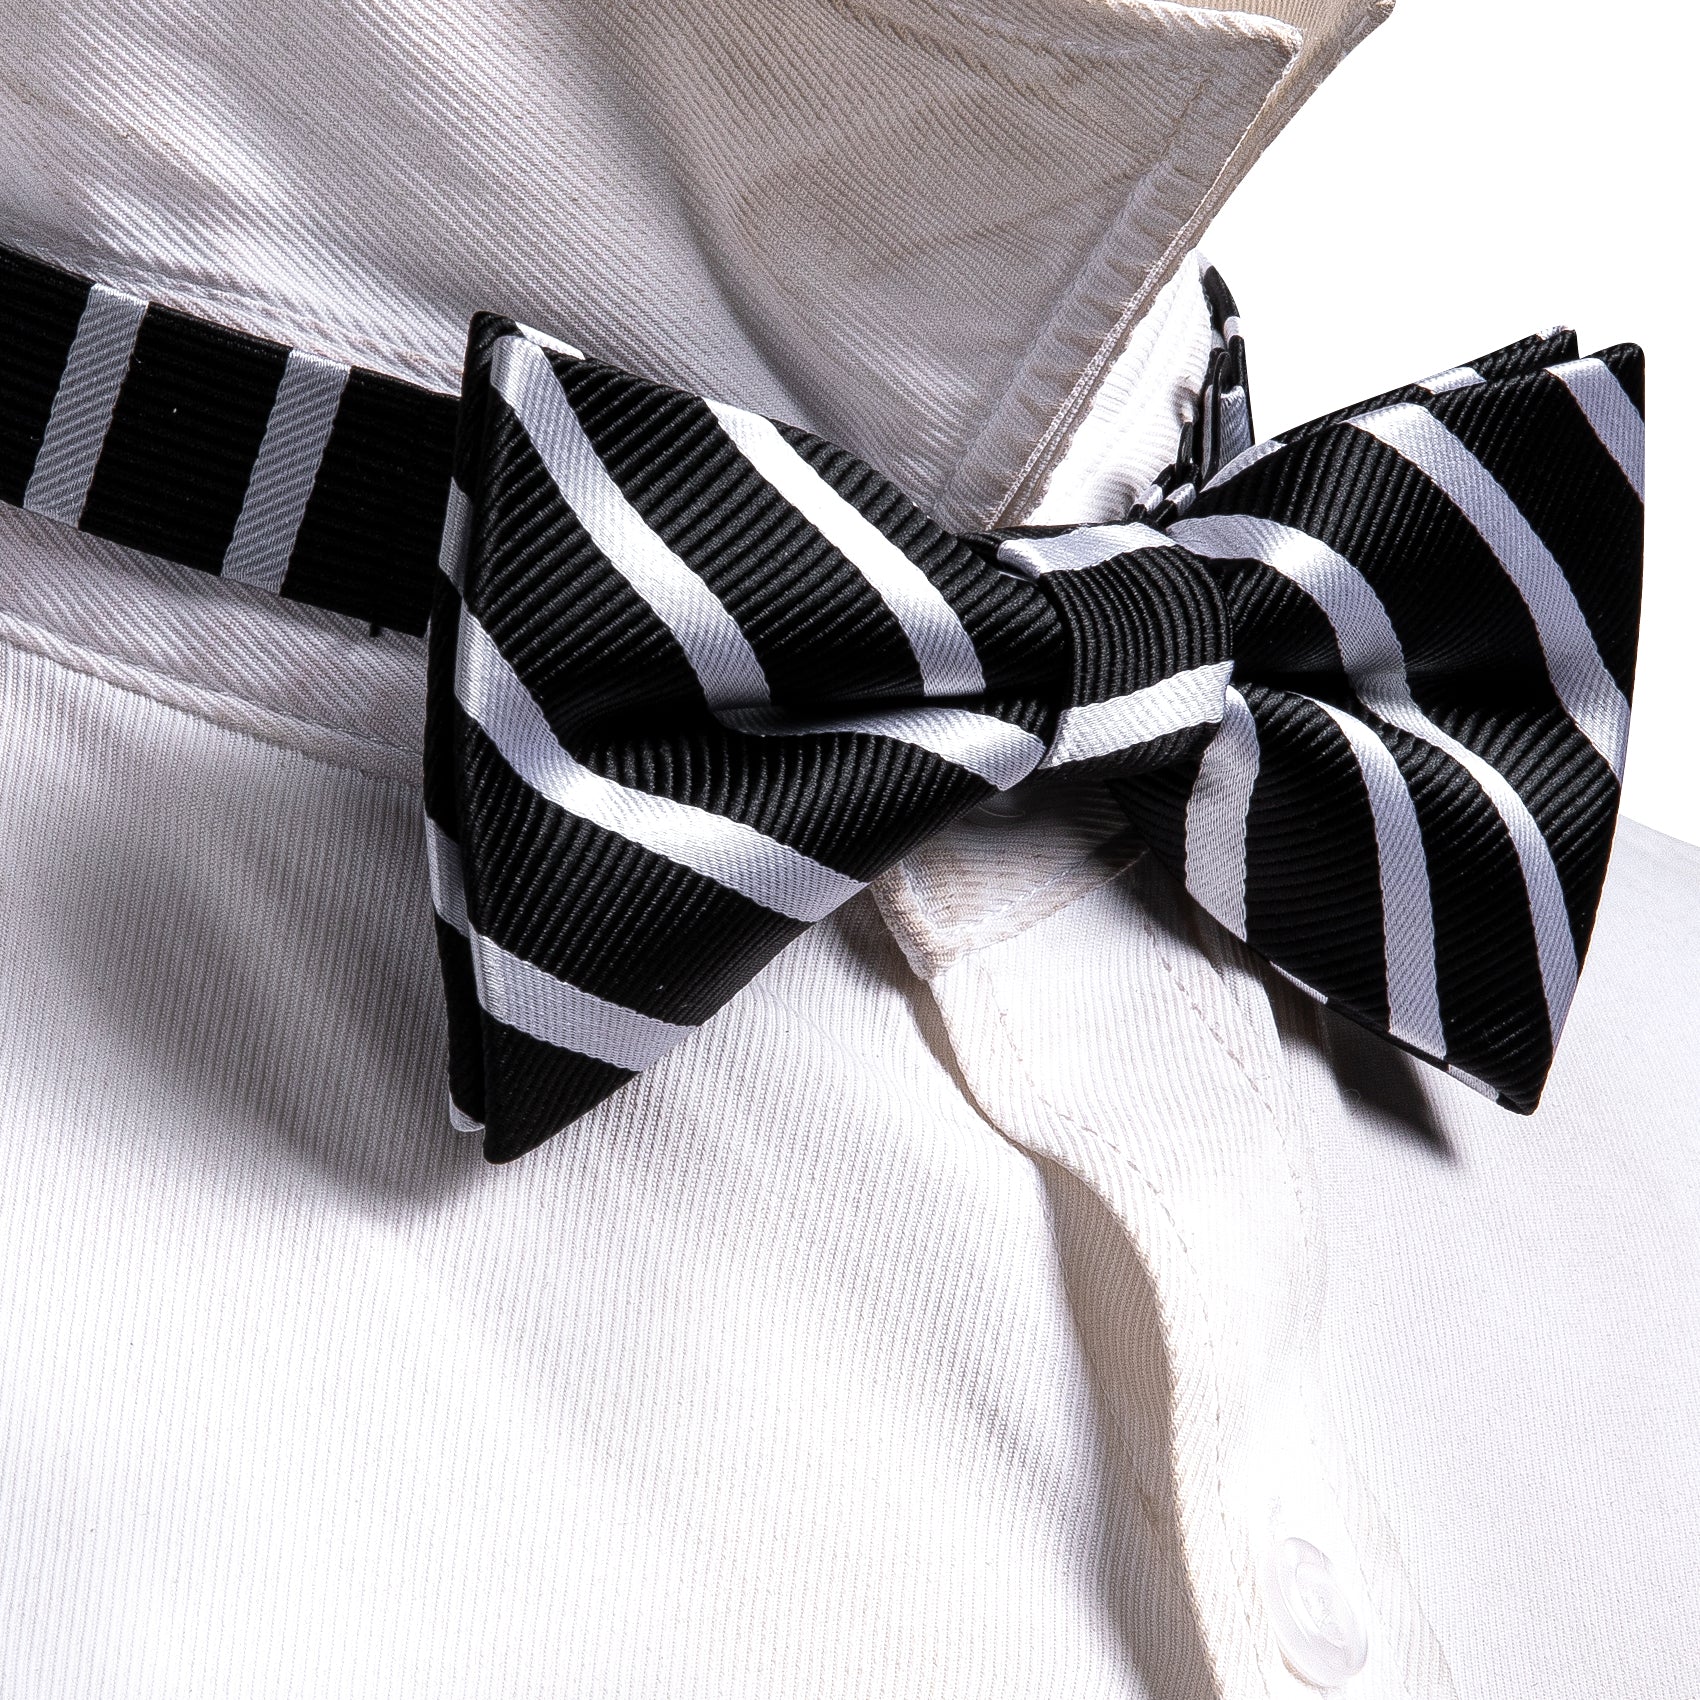 Black White Striped Pre-tied Bow Tie Hanky Cufflinks Set